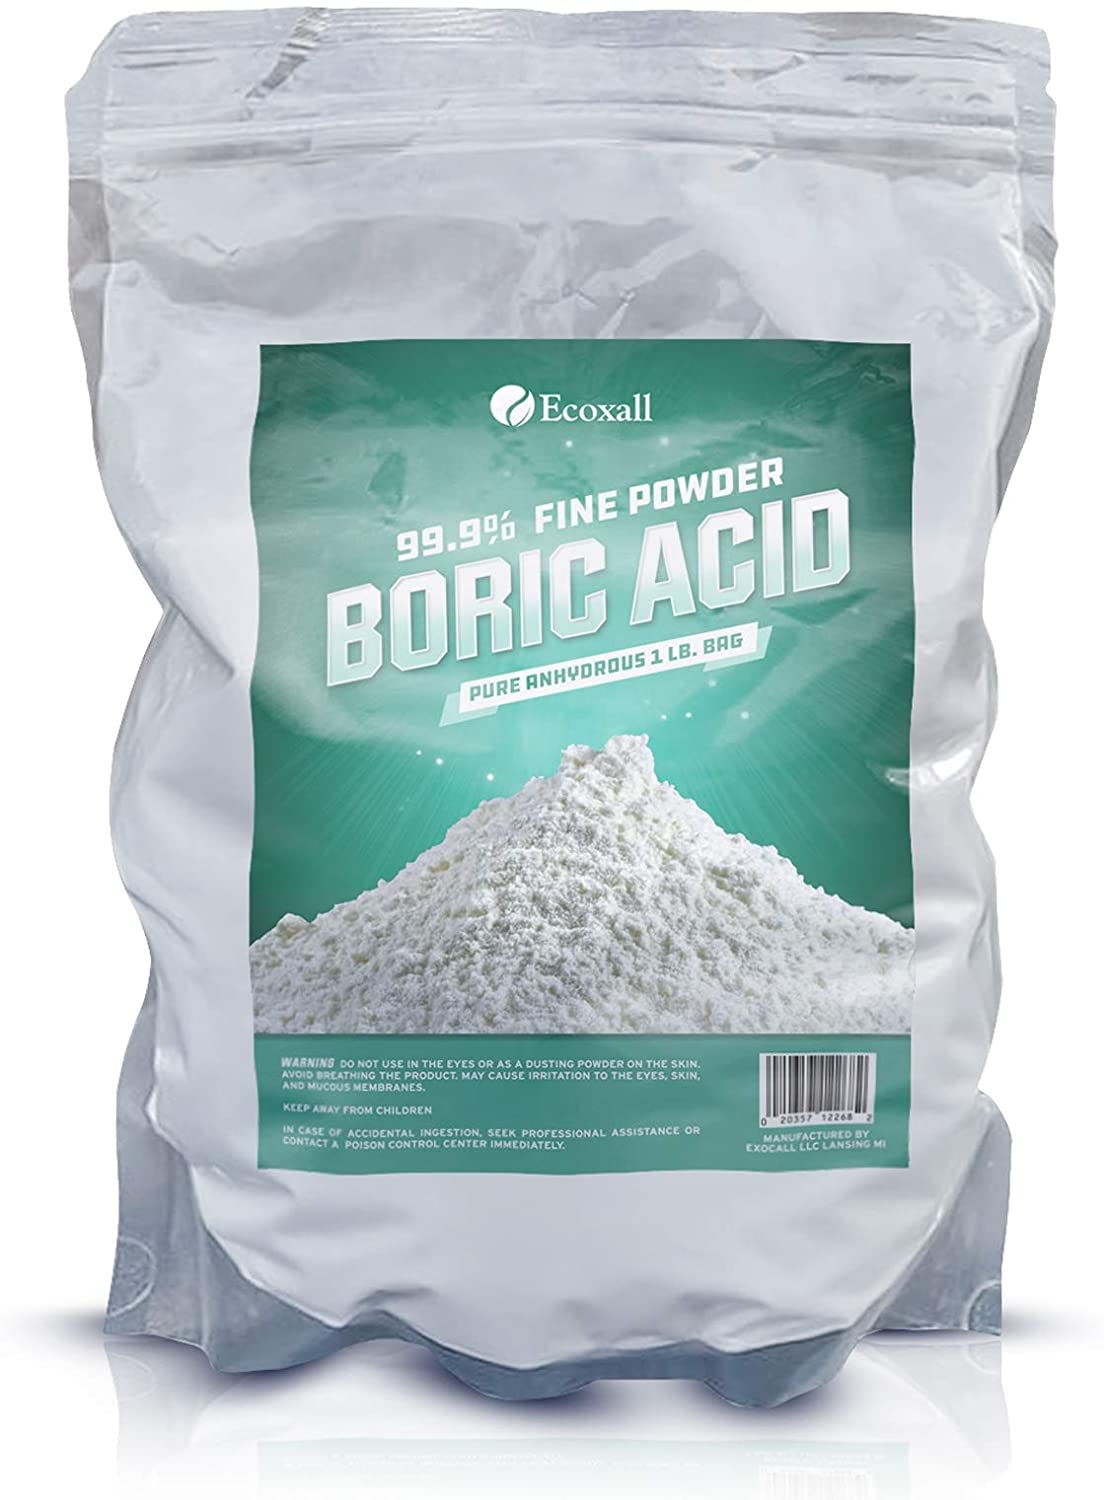 Boric Acid for Ants